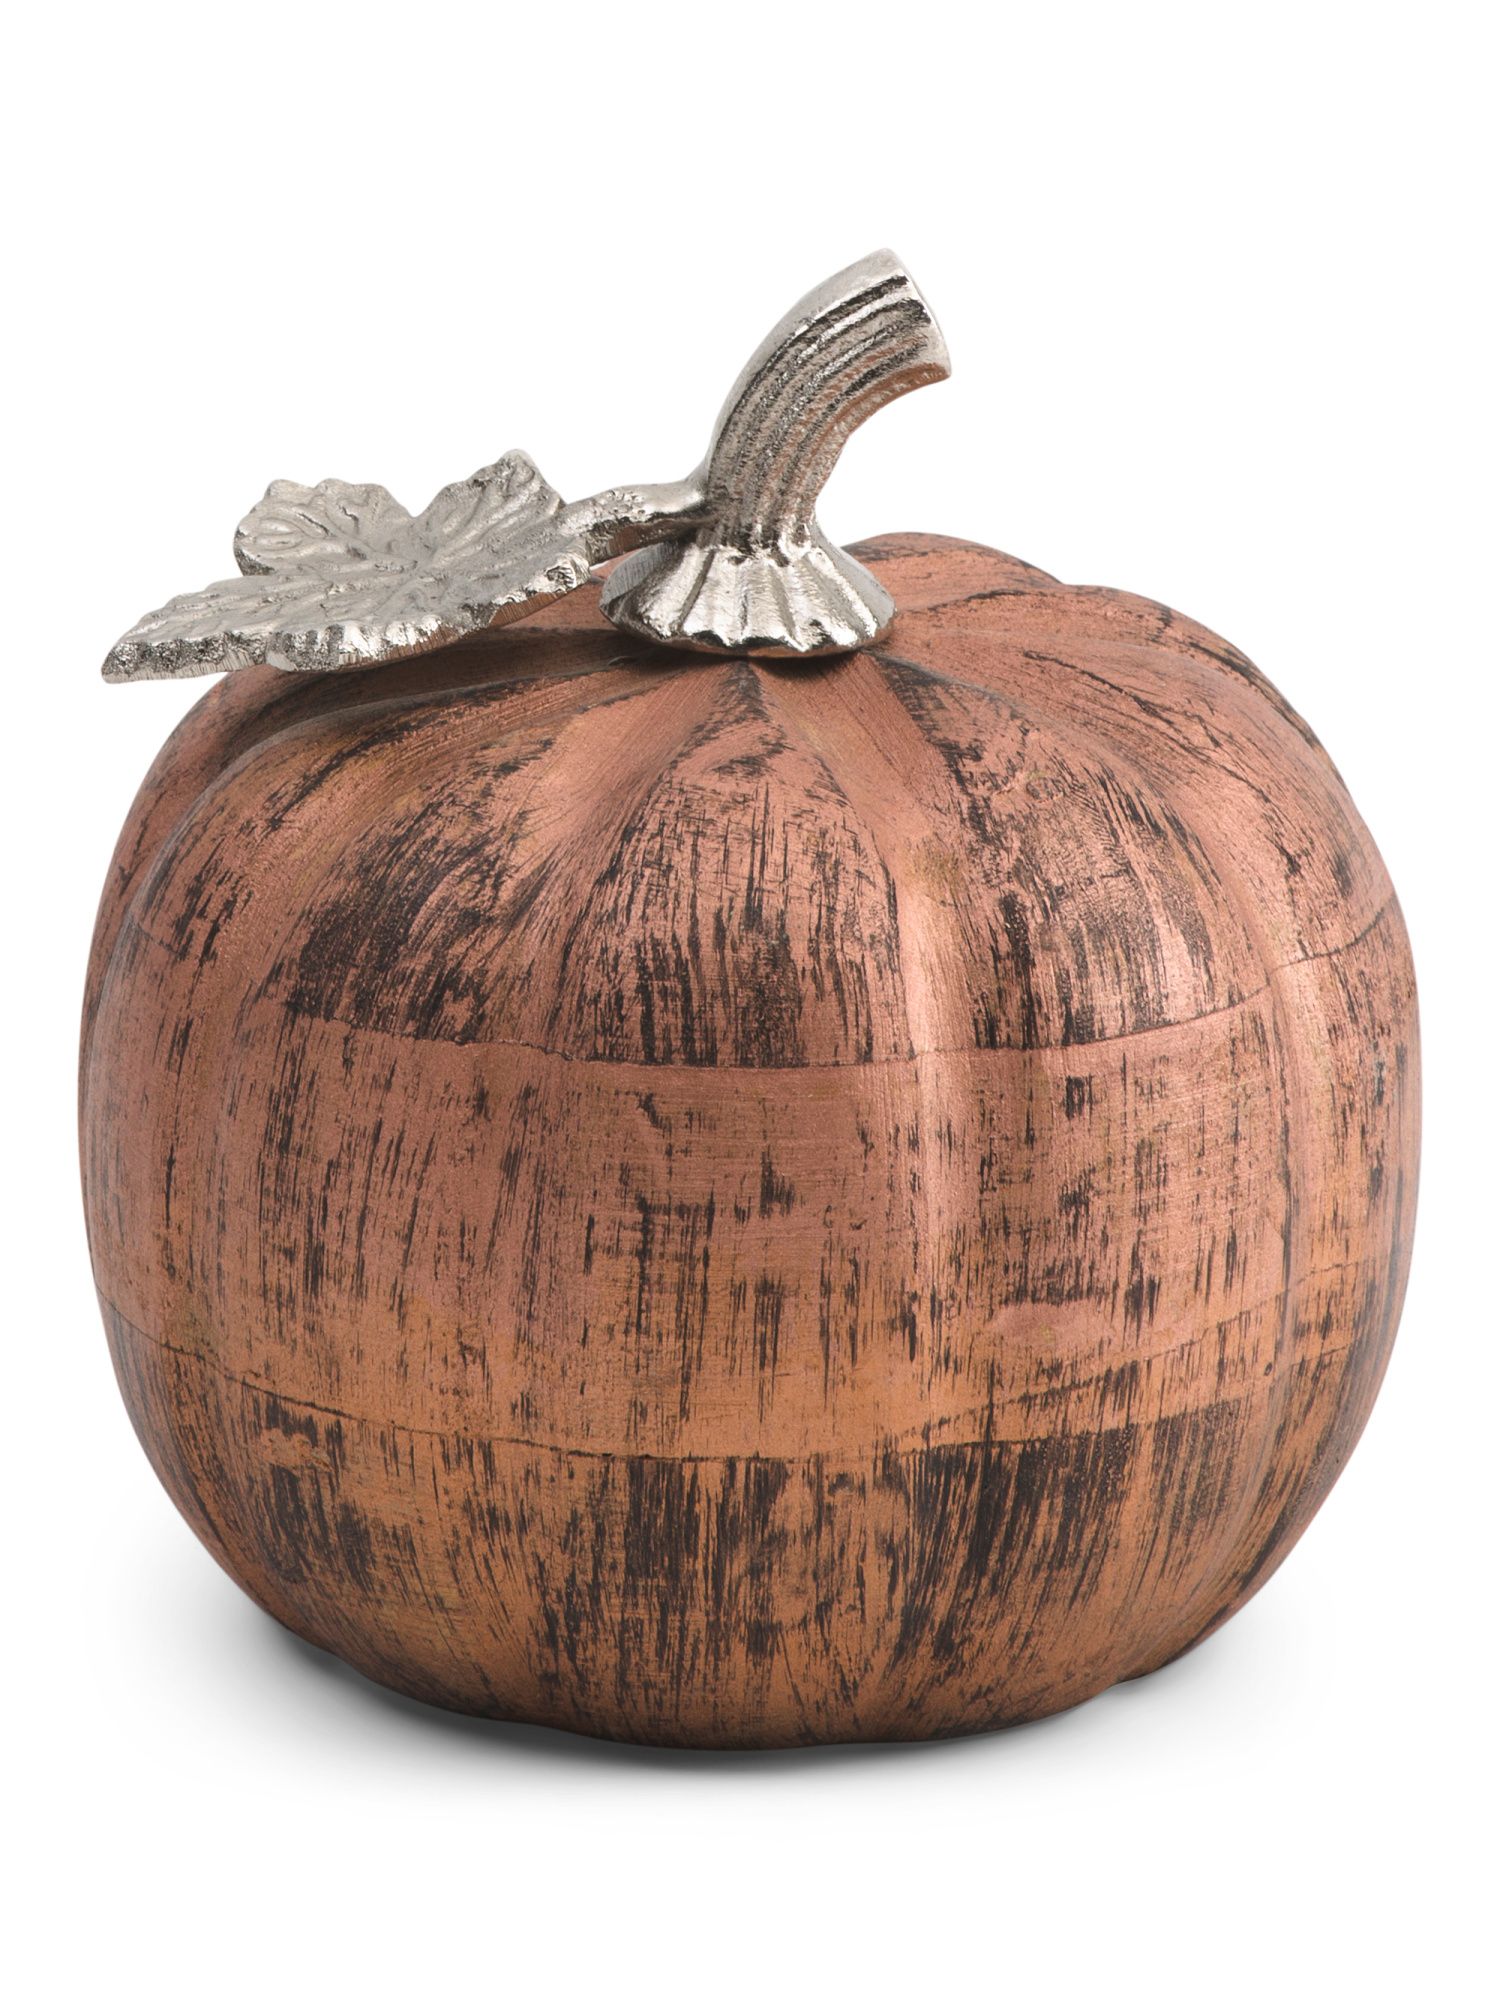 5in Wooden Pumpkin With Shiny Copper Finish | TJ Maxx